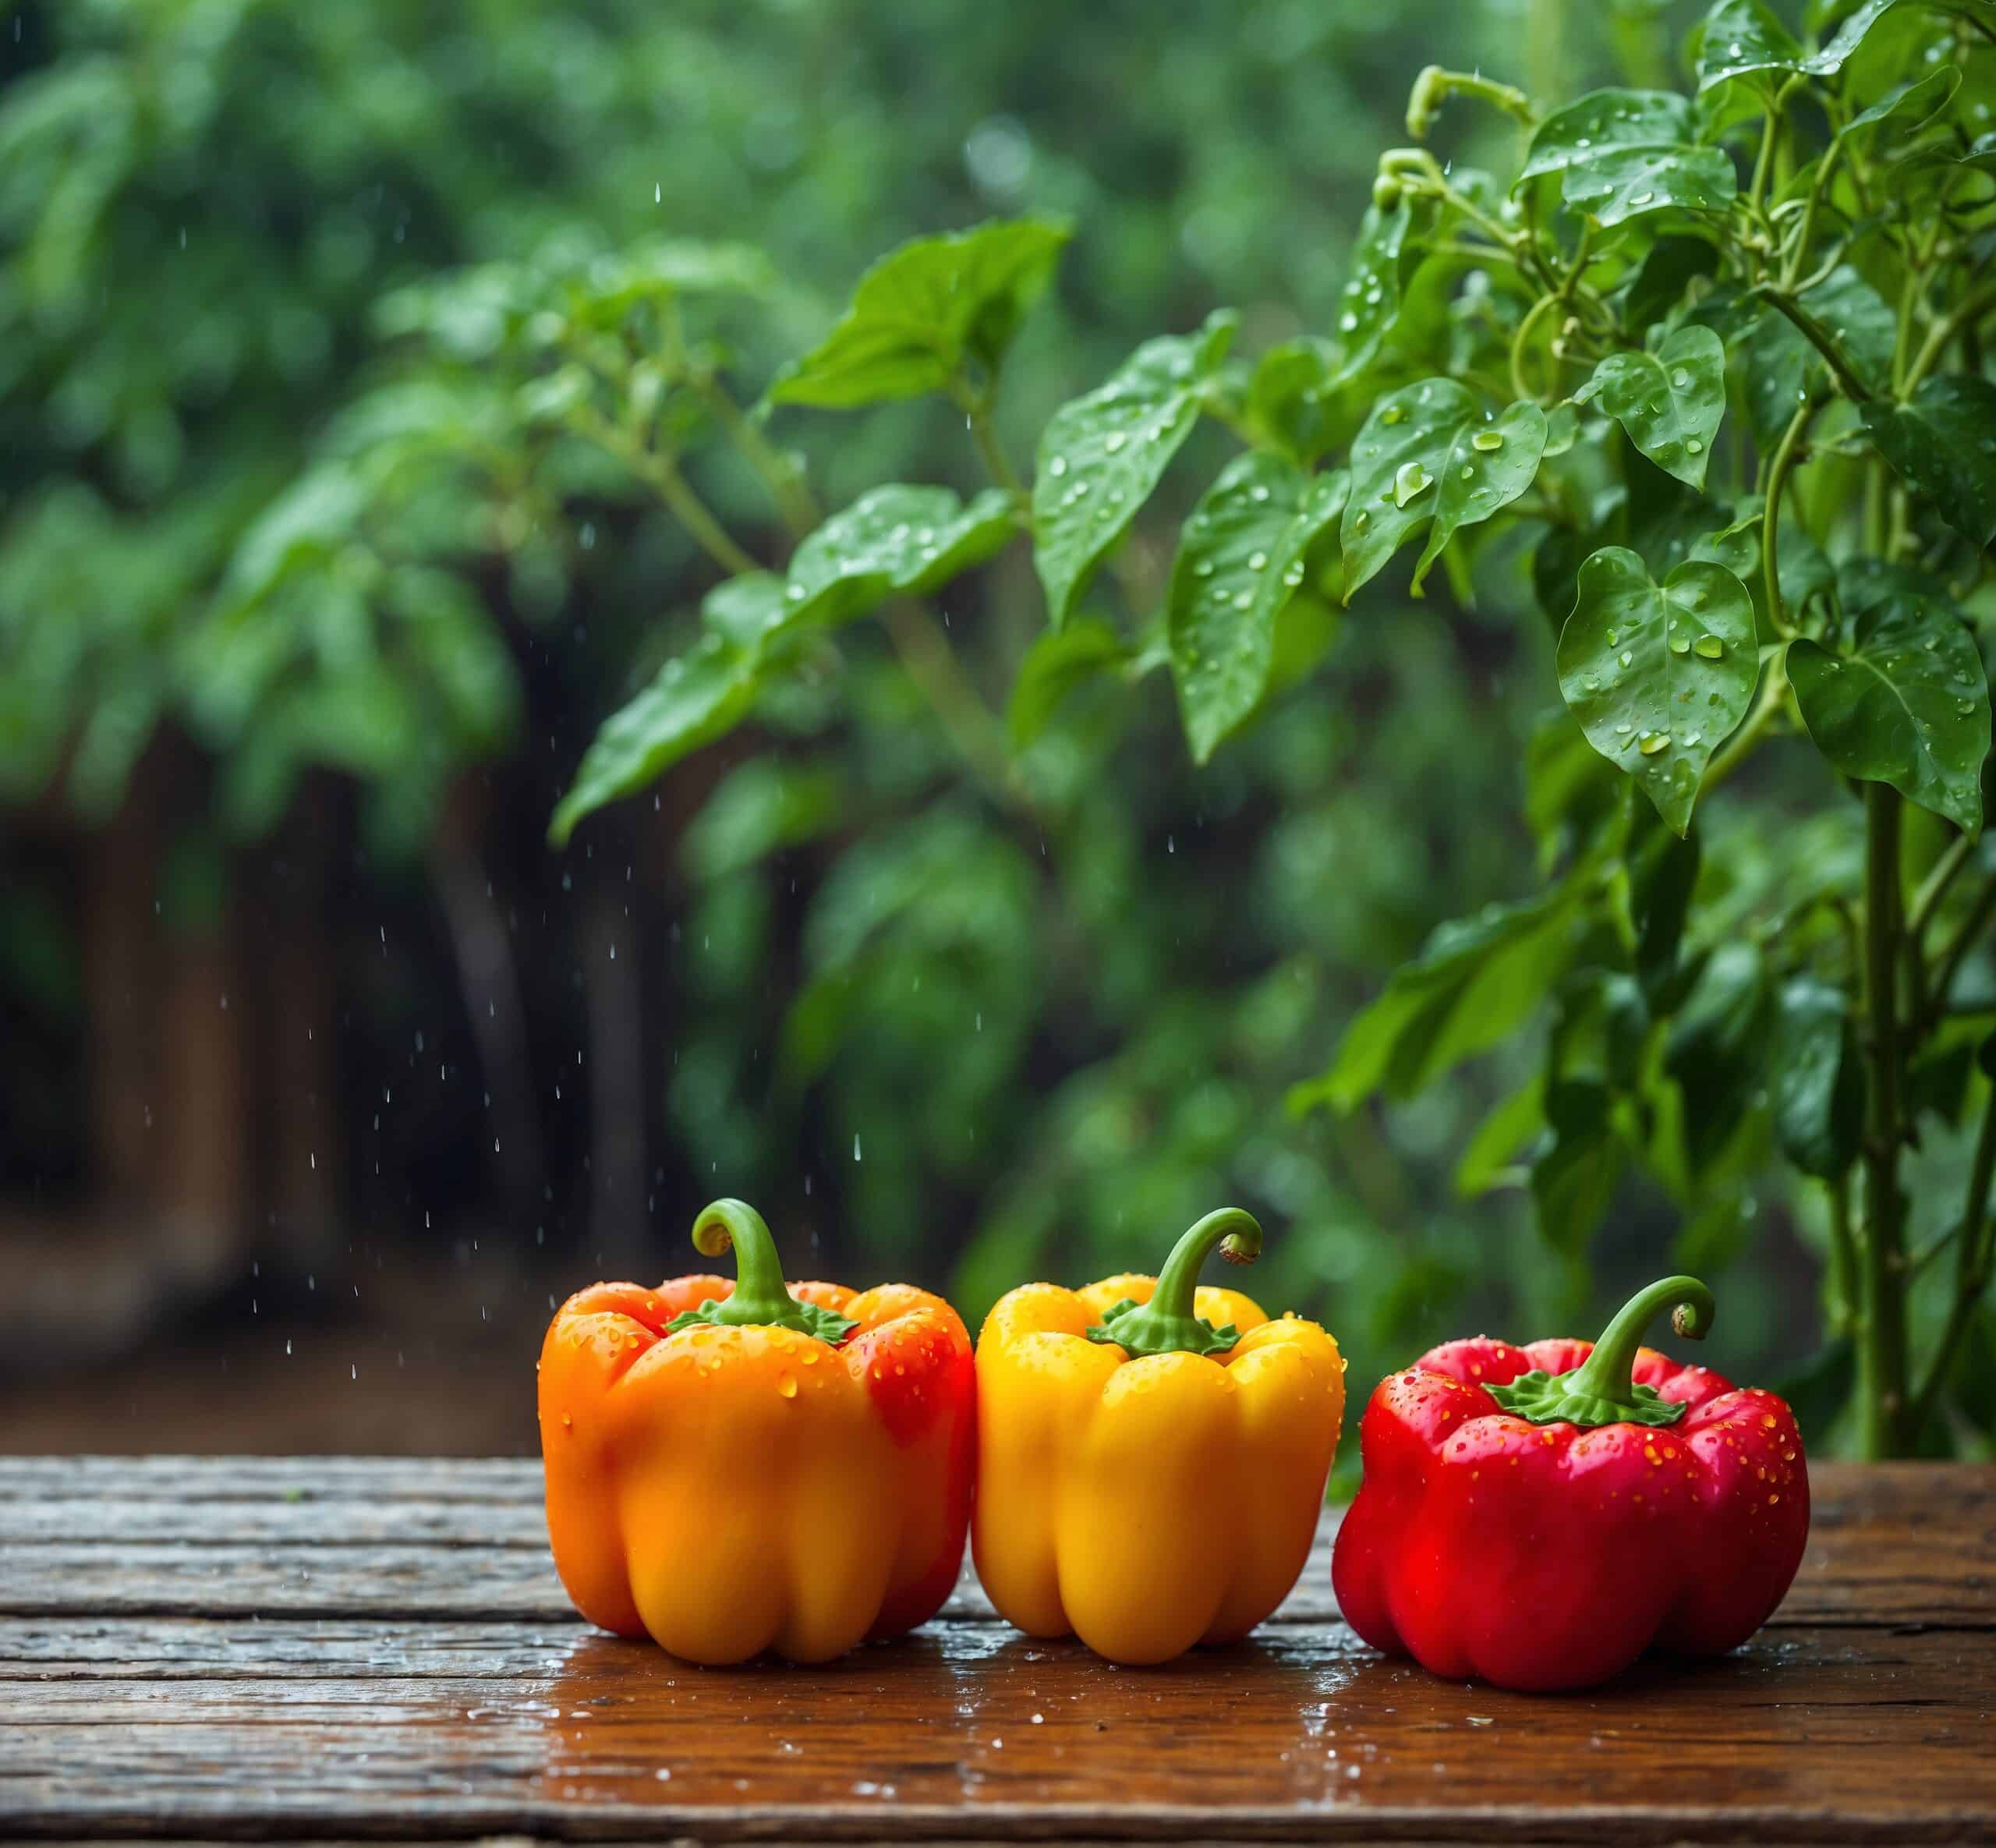 growmyownhealthfood.com : When should I start growing peppers?